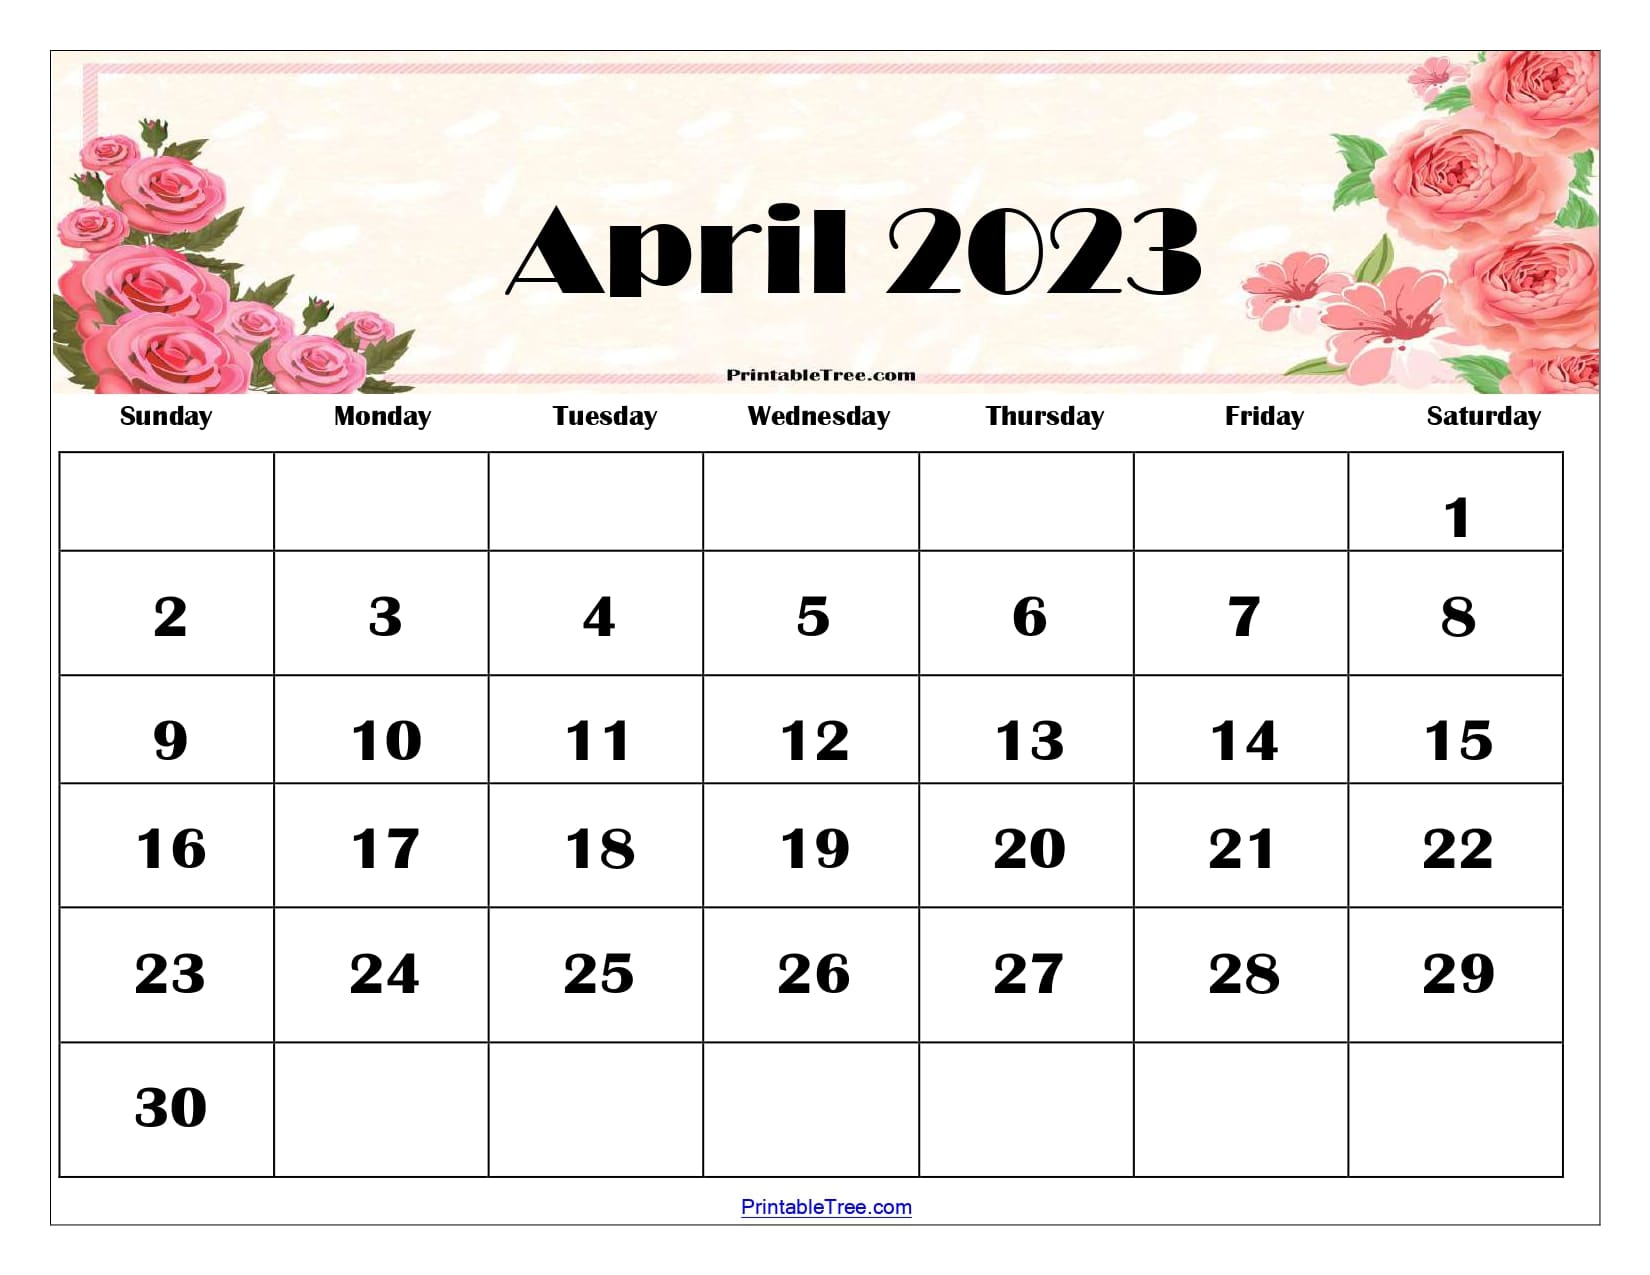 Free Printable Calendar April 2023 To March 2024